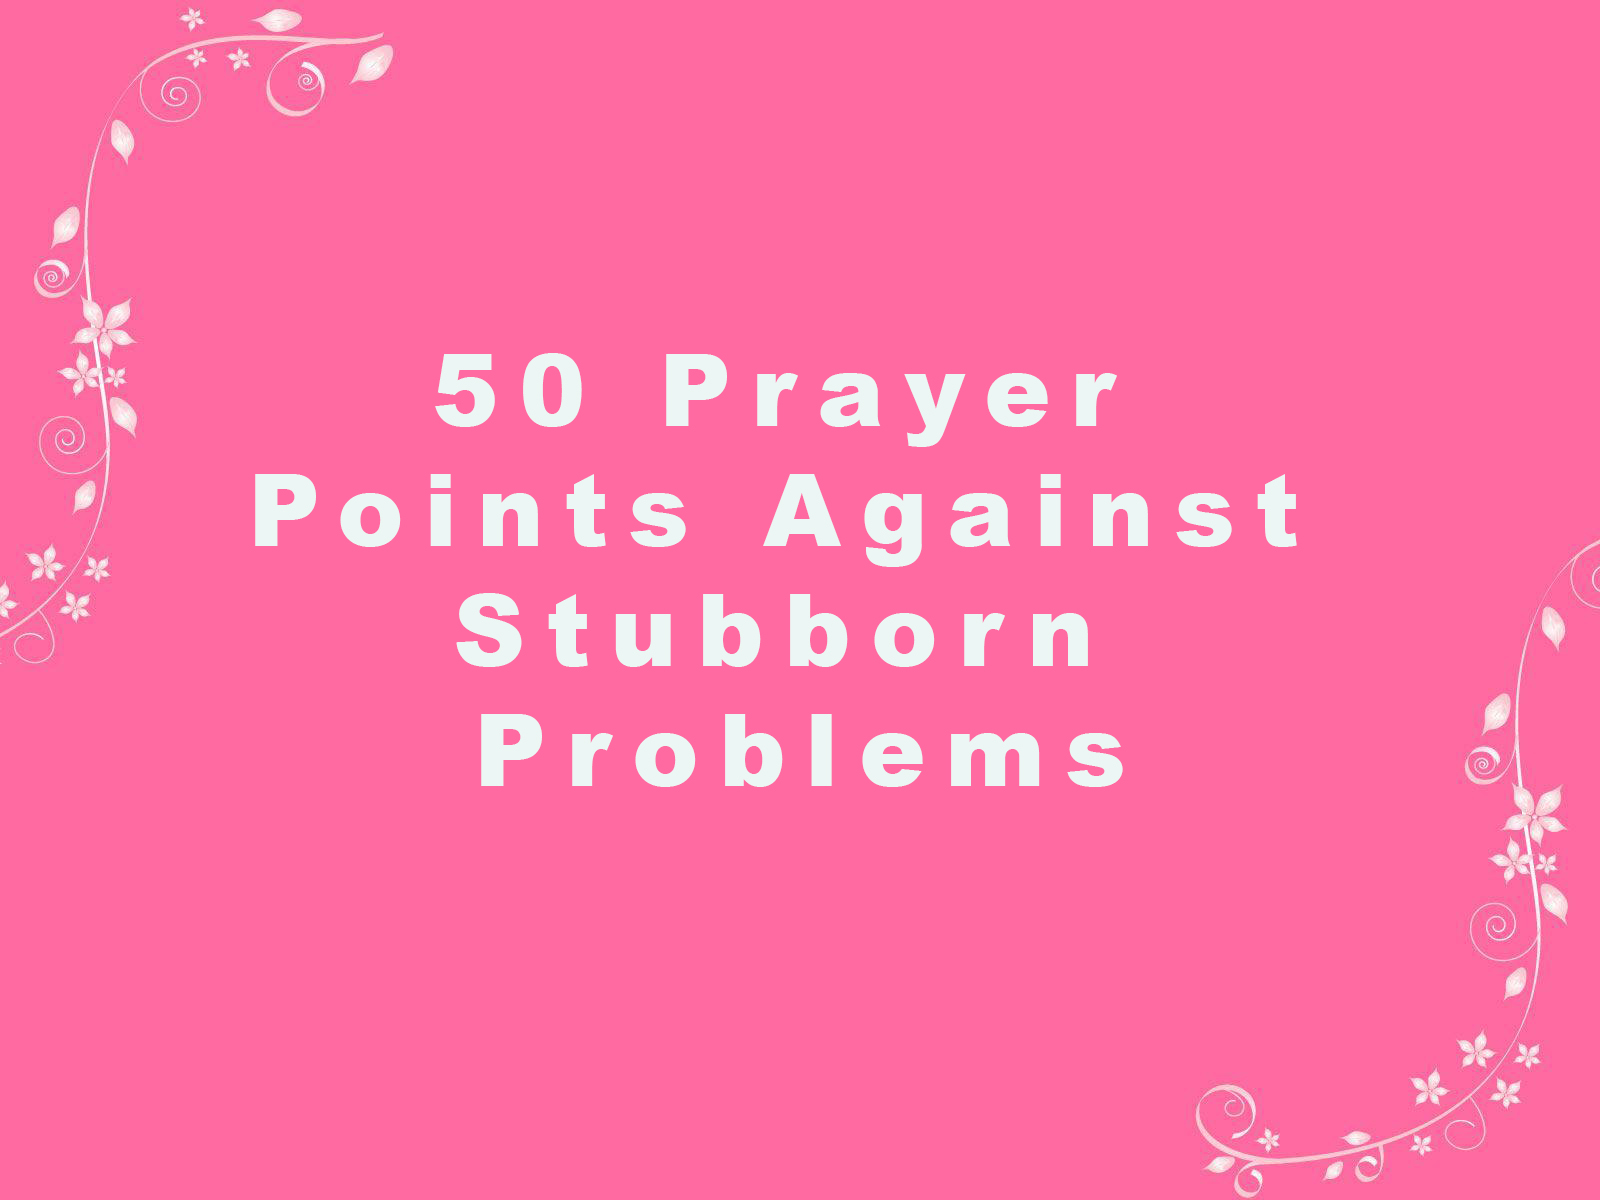 50 Prayer Points Against Stubborn Problems